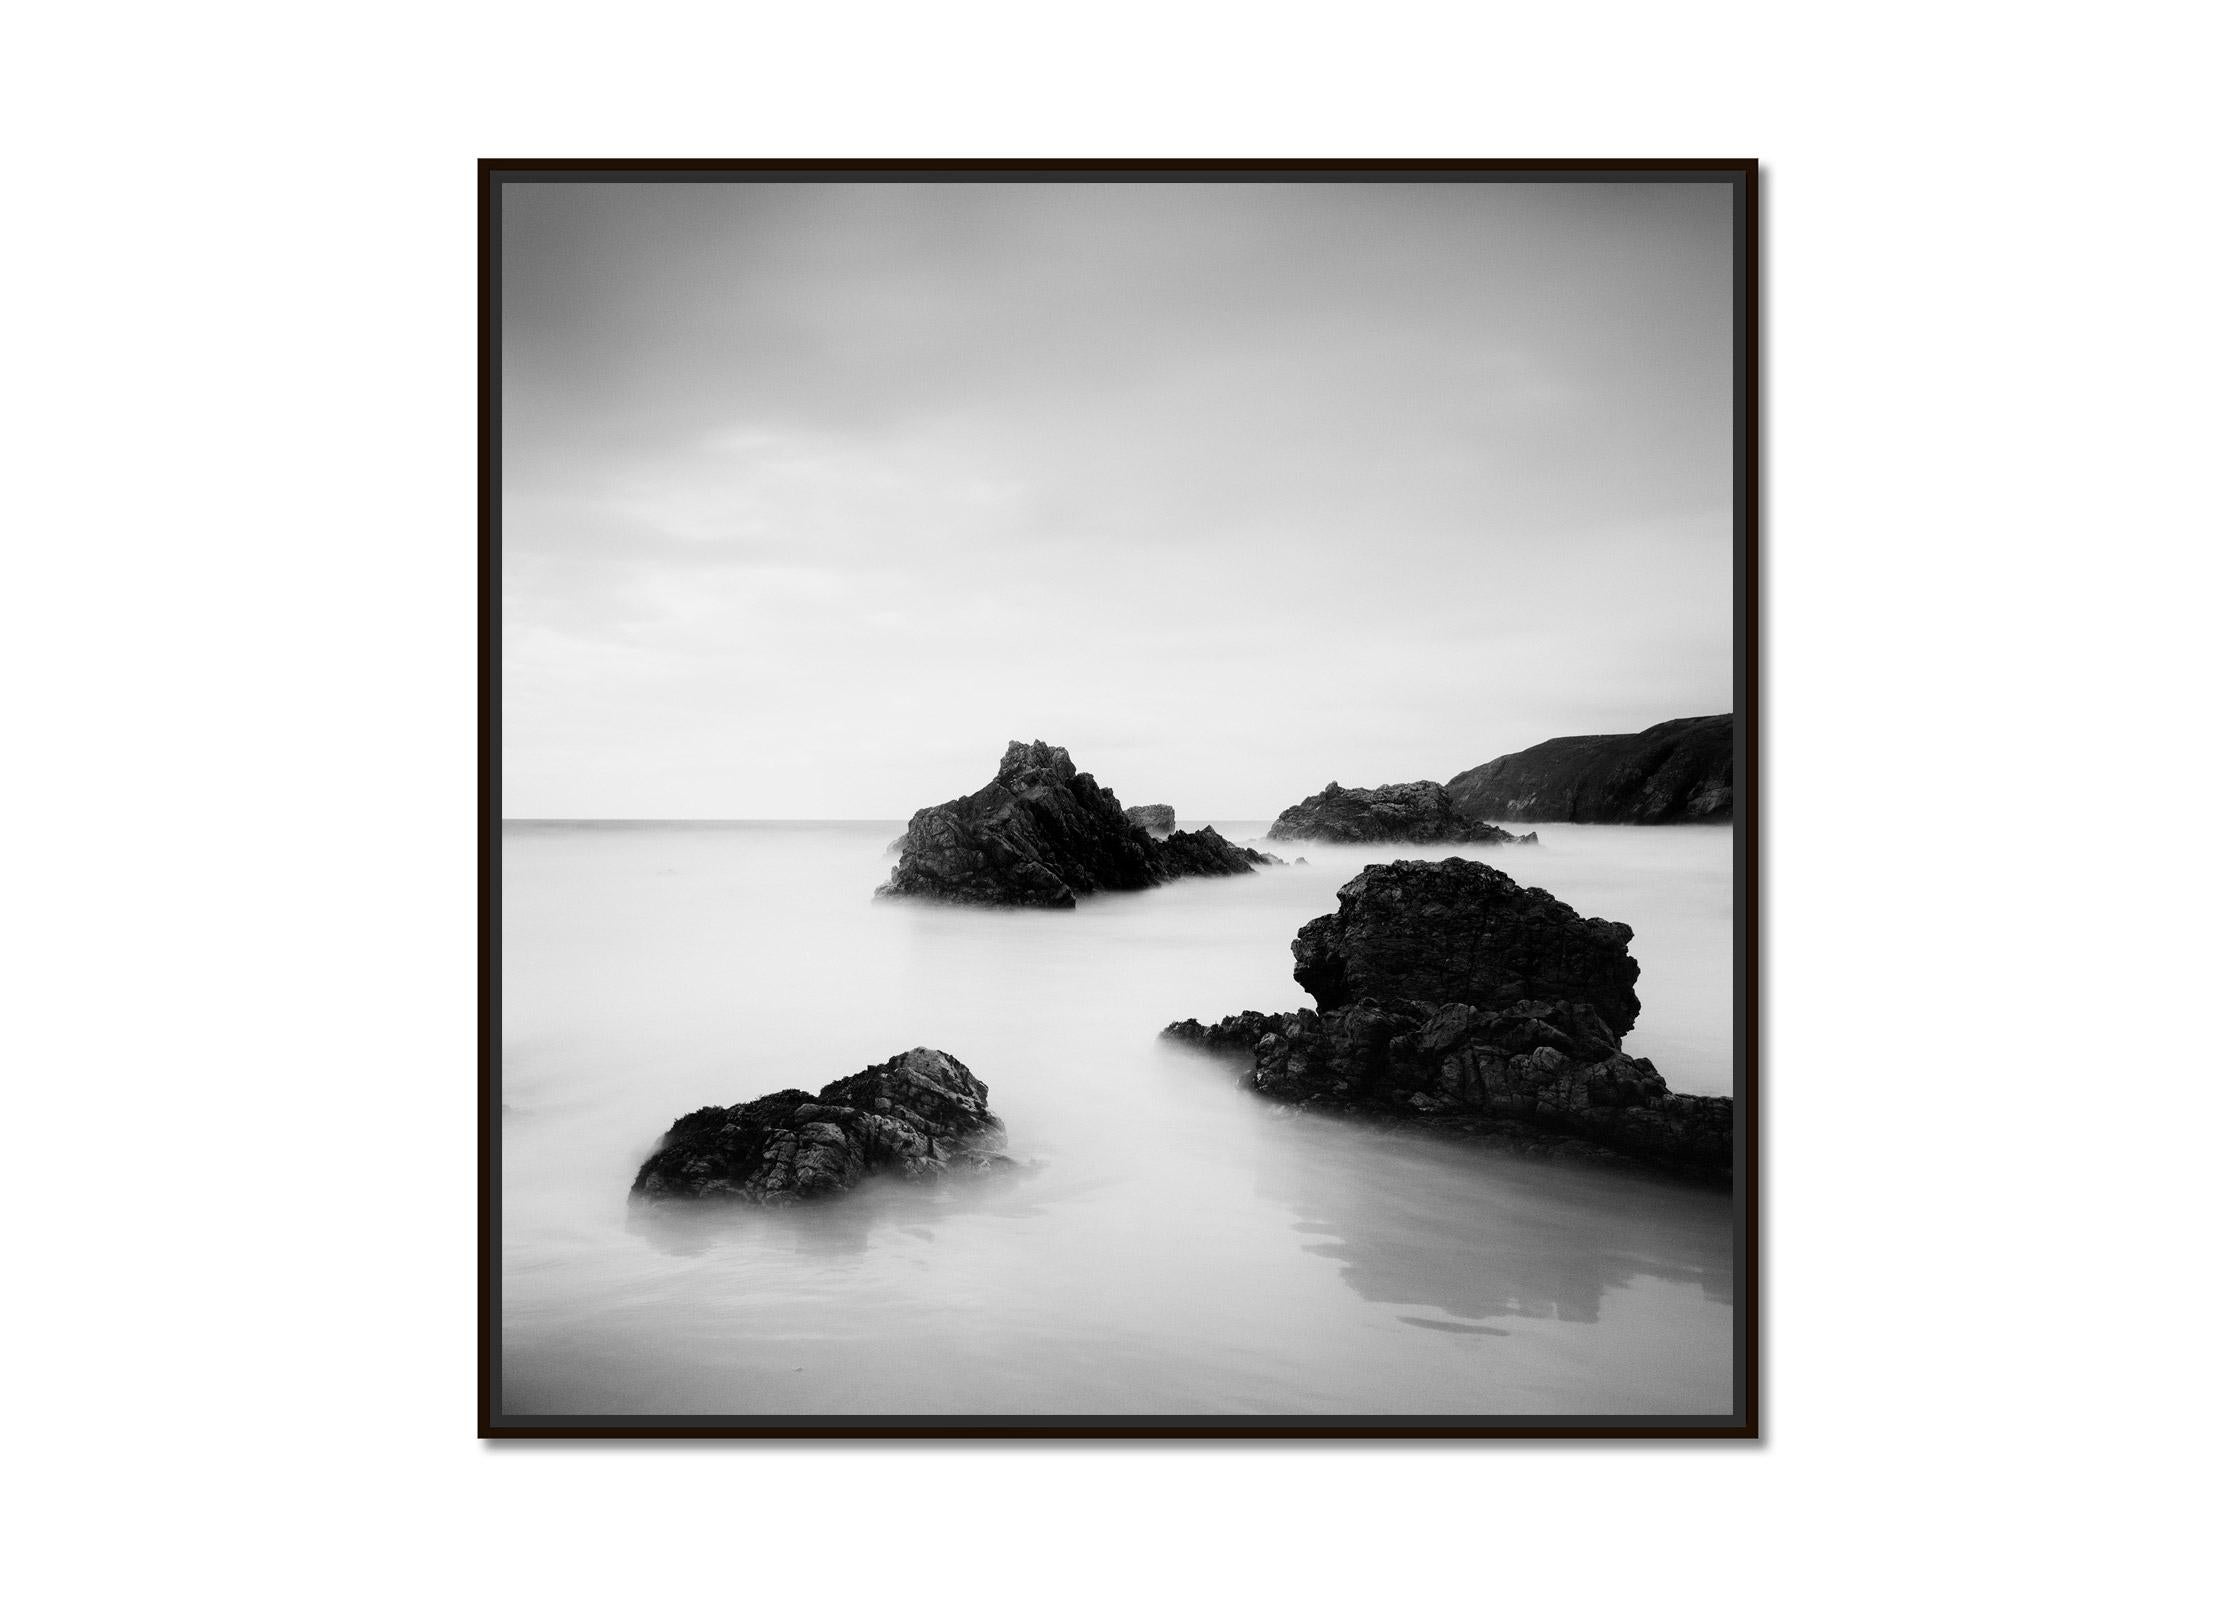 Award Winning Beach, coastline, Scotland, black and white landscape photography - Photograph by Gerald Berghammer